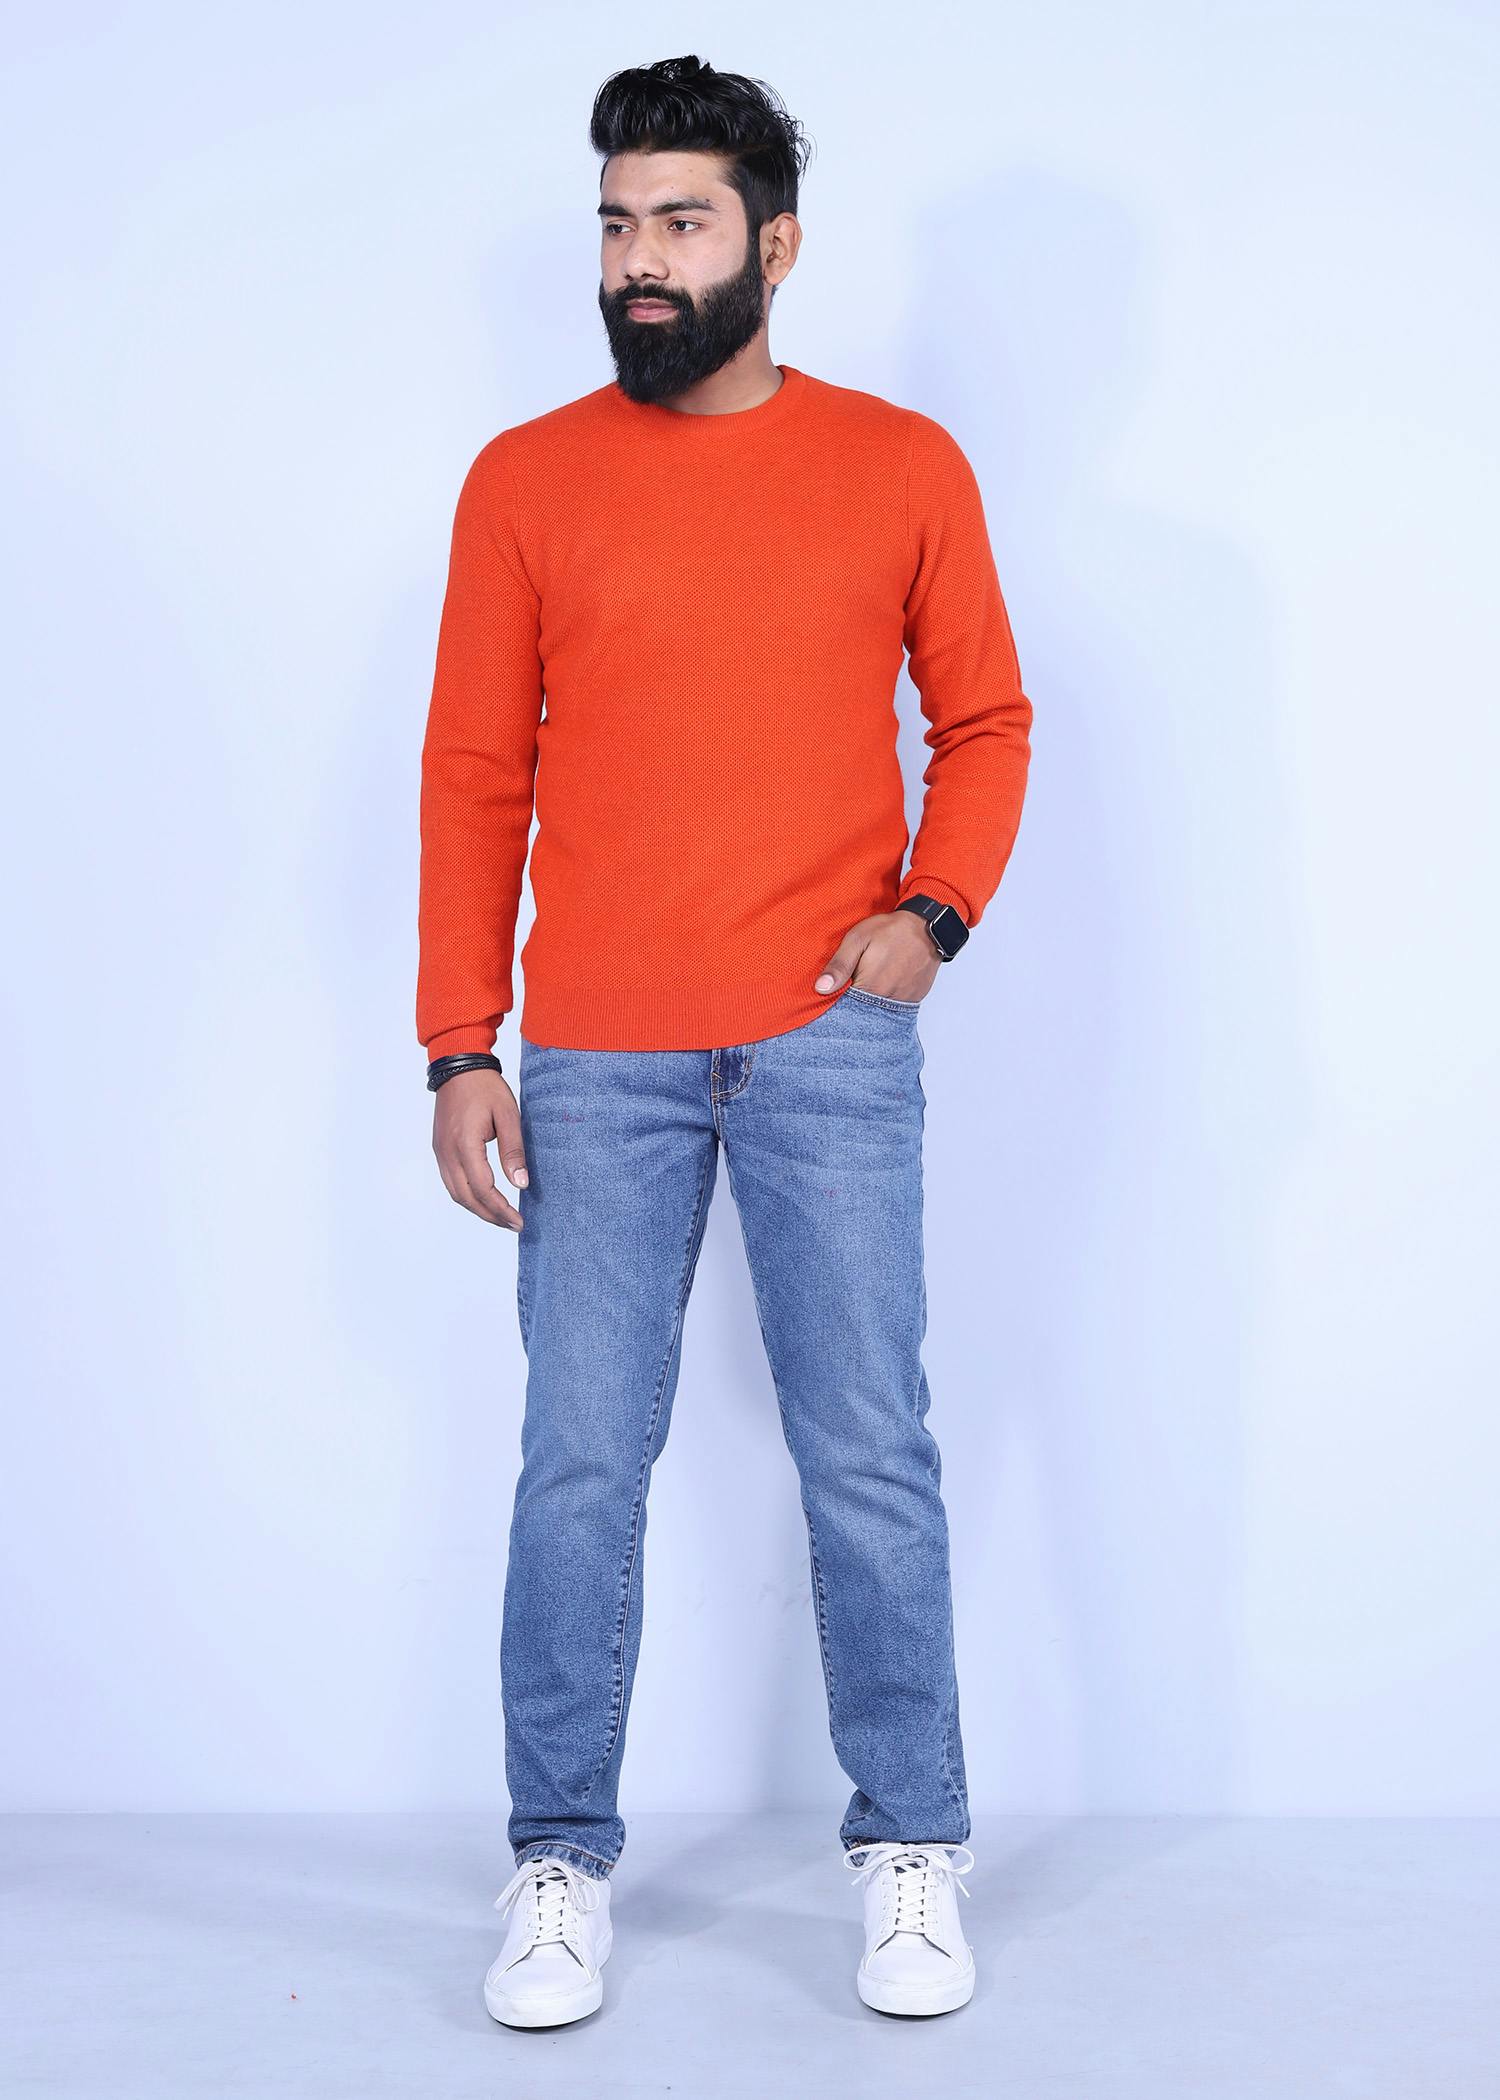 hillstar v sweater orange color full front view